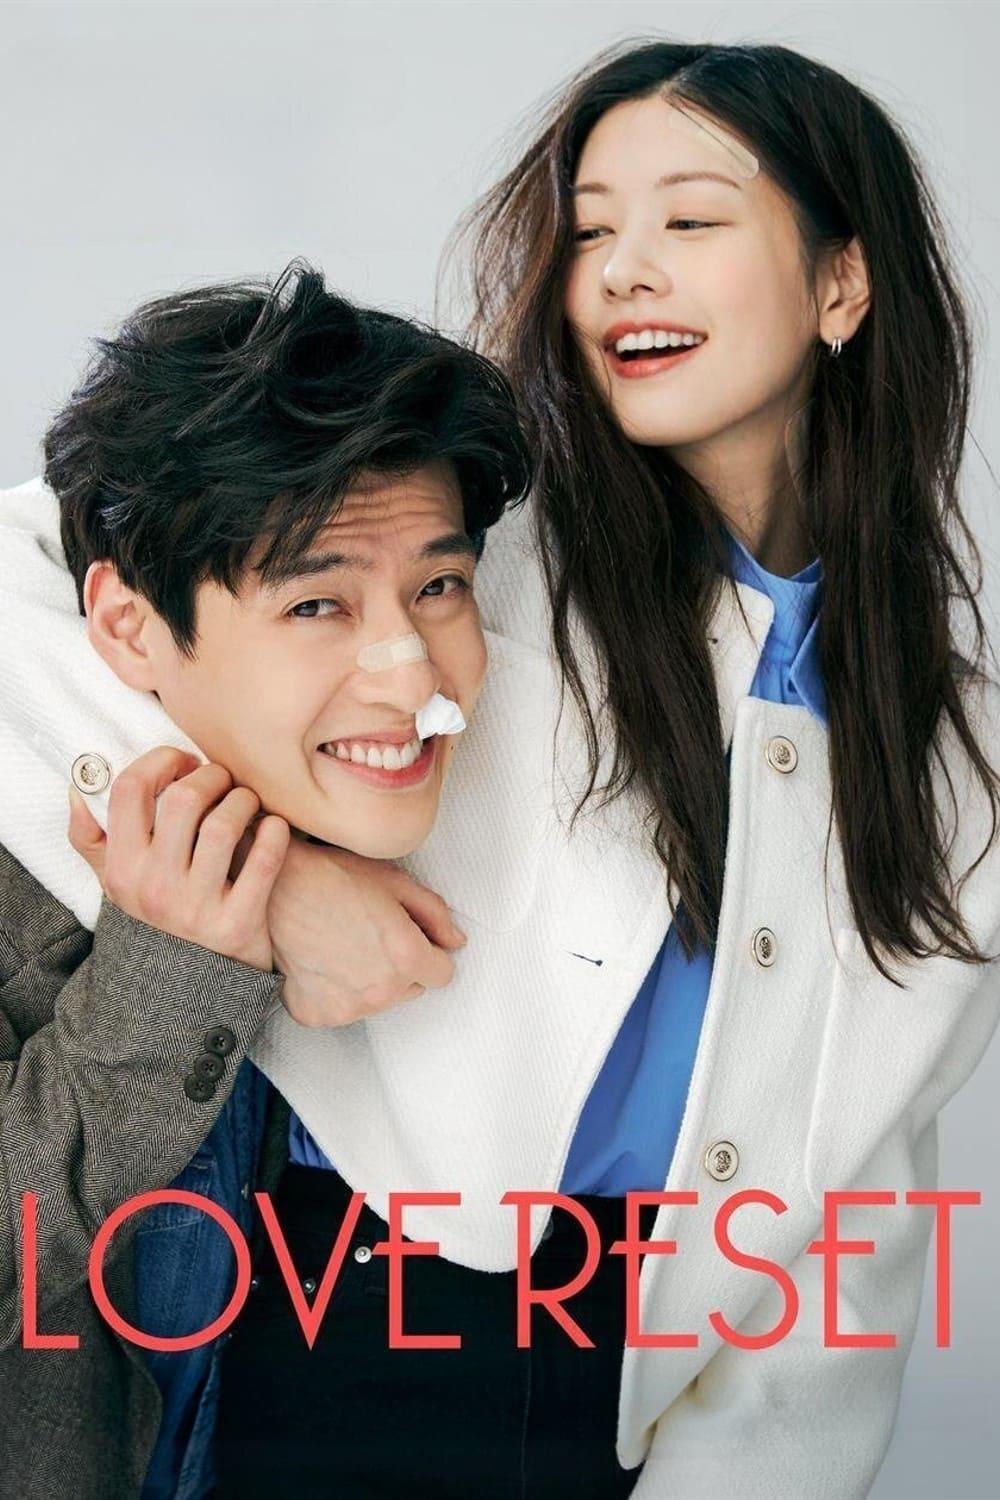 Love Reset poster